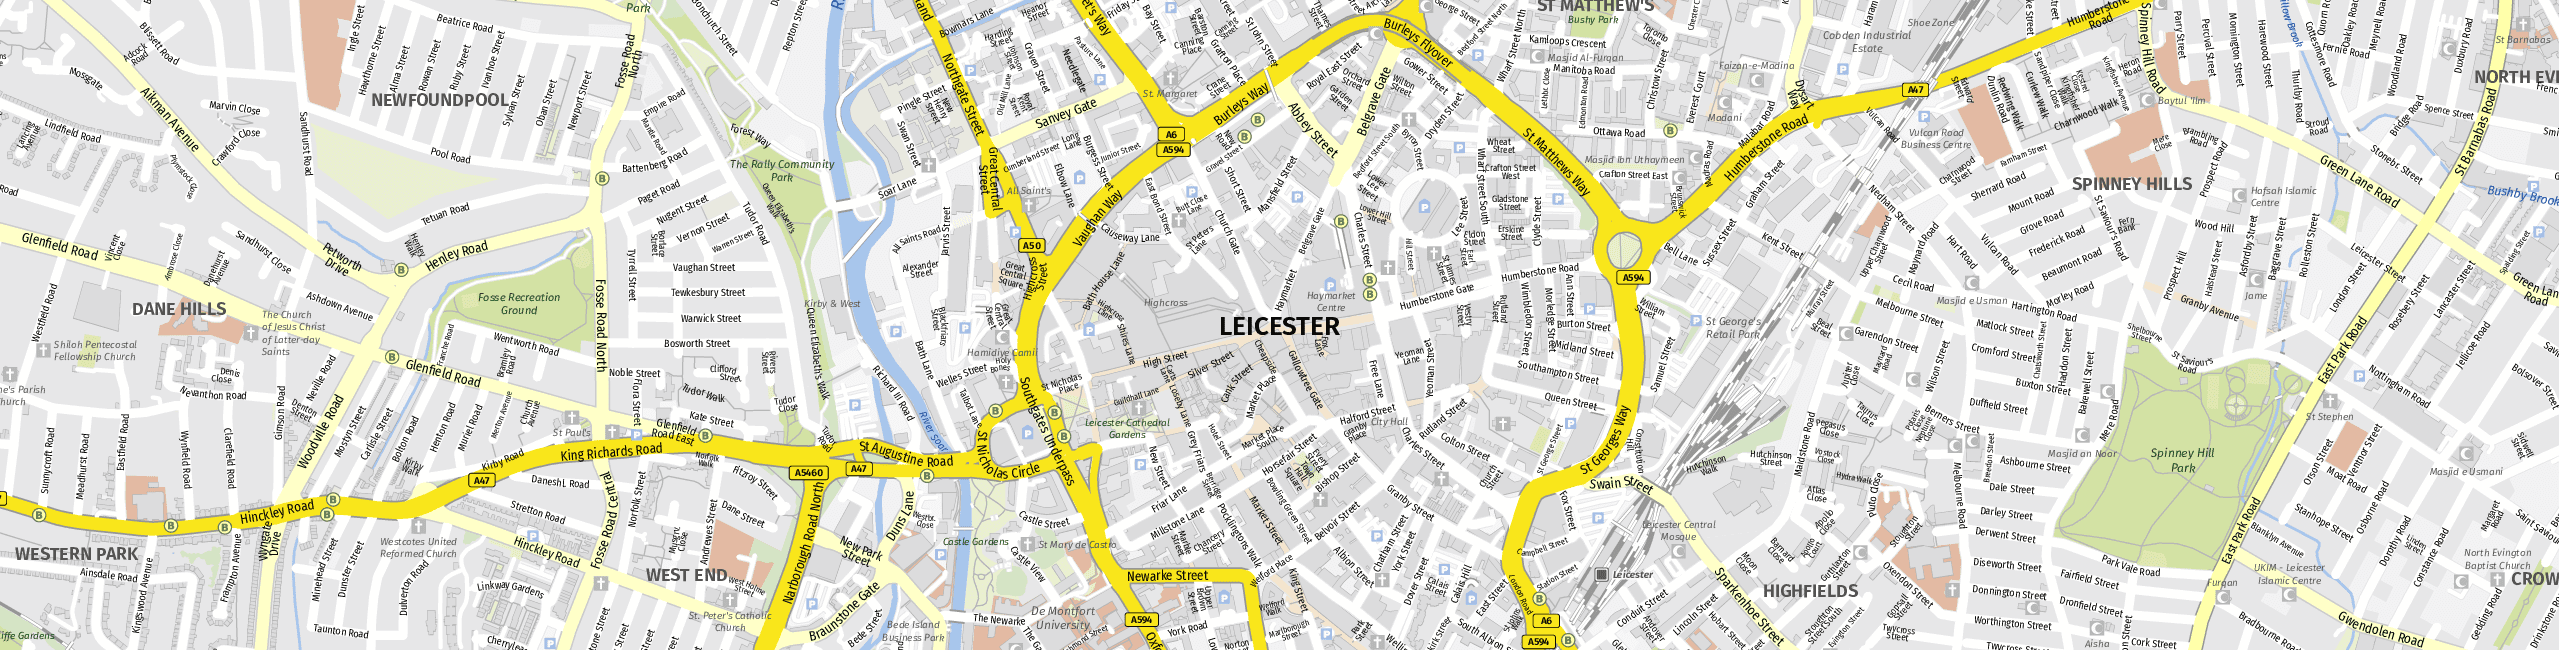 Stadtplan Leicester zum Downloaden.